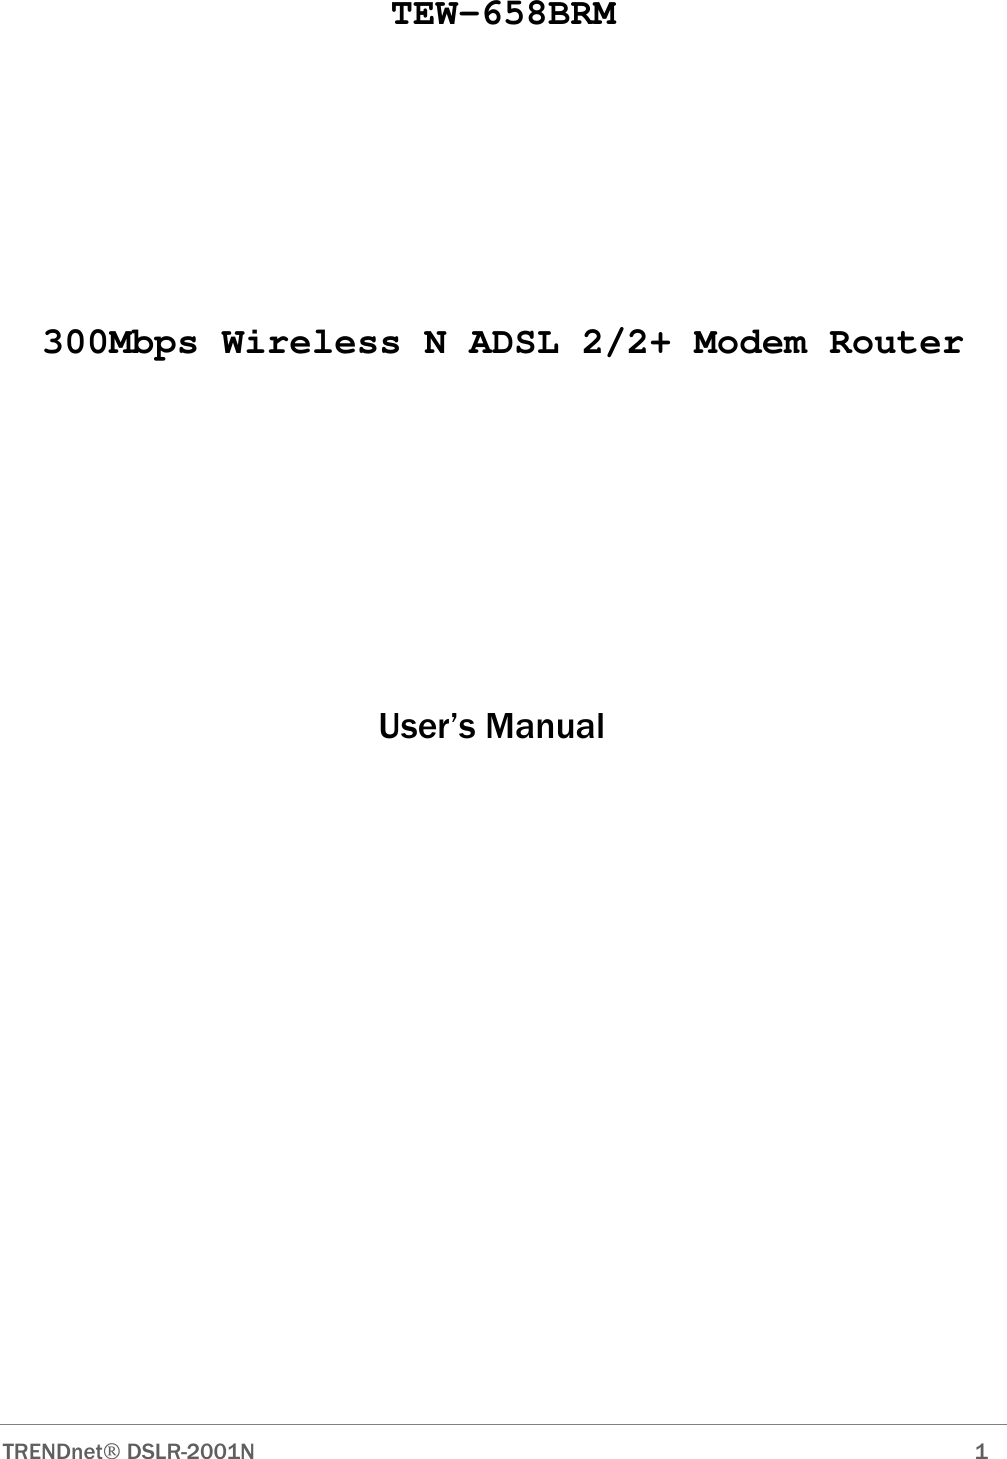  TRENDnet DSLR-2001N        1  TEW-658BRM      300Mbps Wireless N ADSL 2/2+ Modem Router                                               User’s Manual                